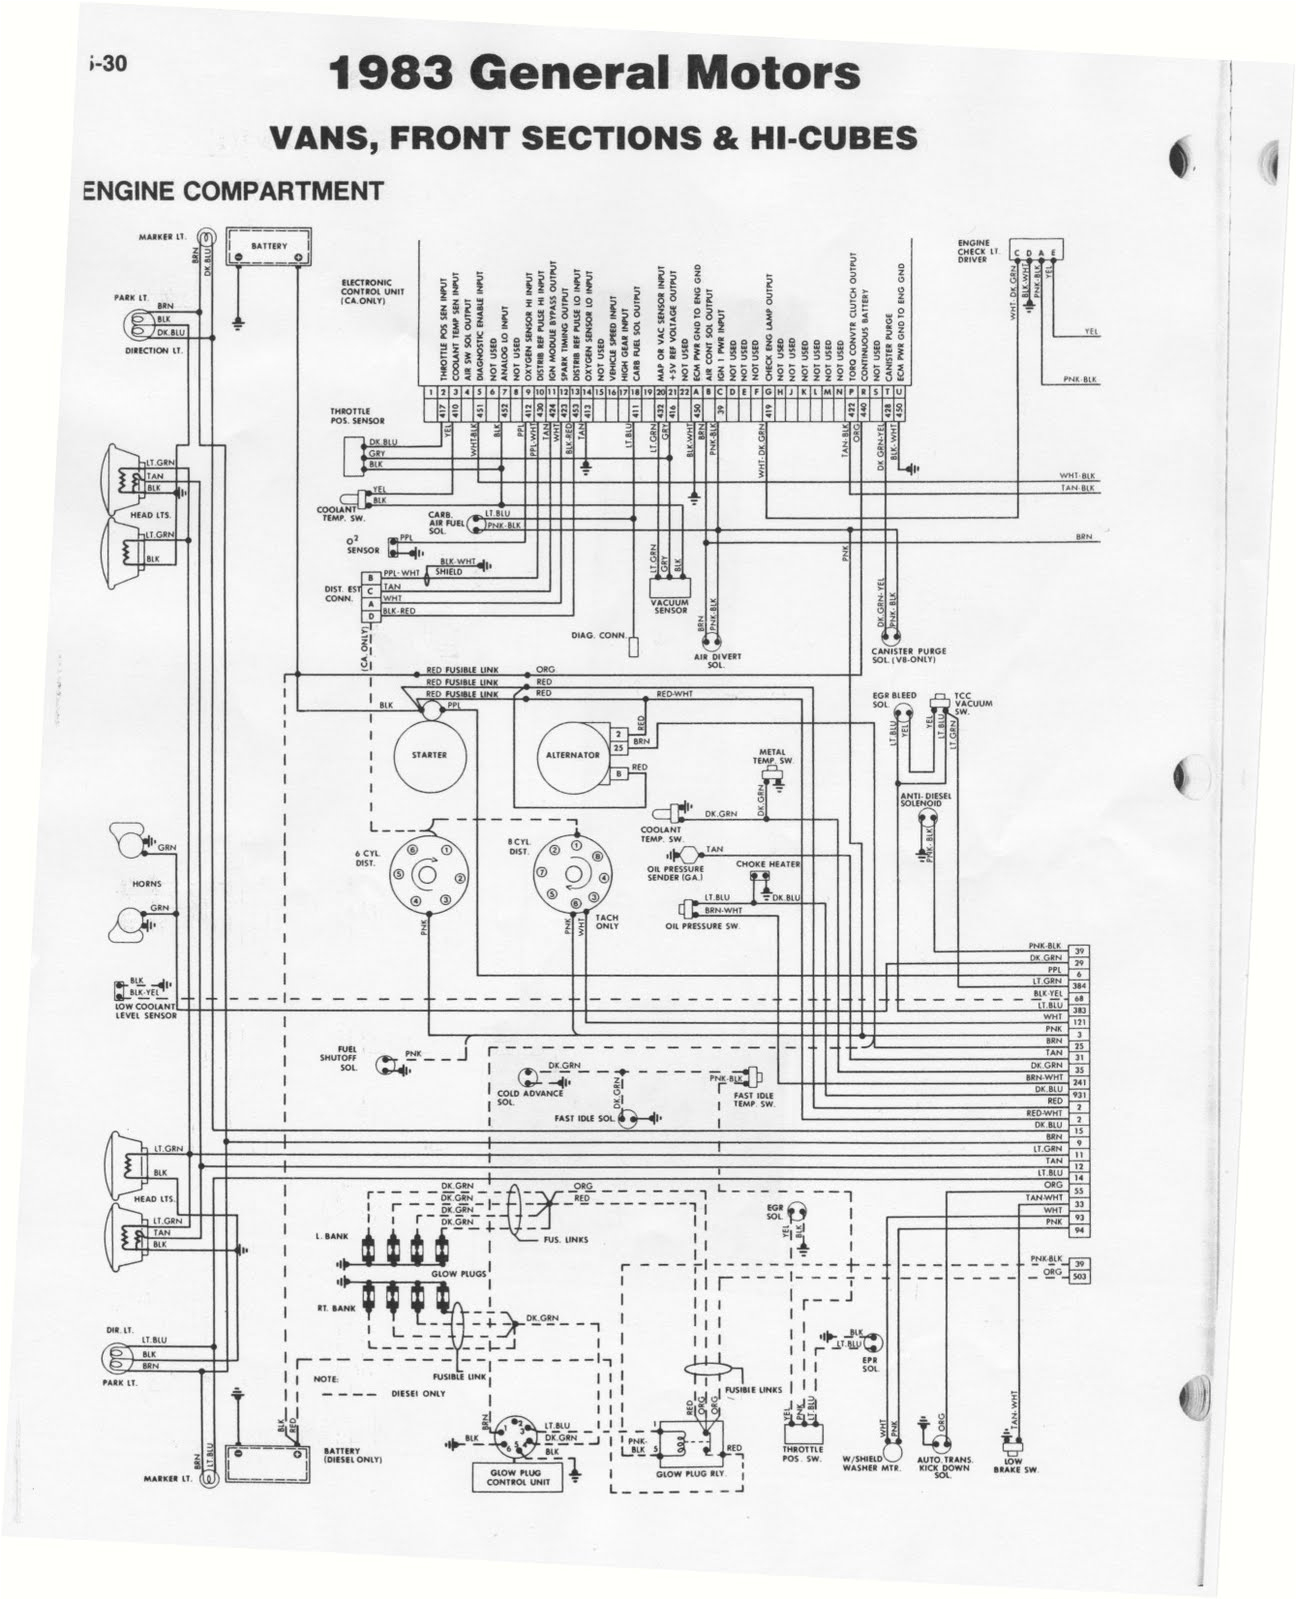 1988 fleetwood motorhome wiring diagram wiring diagram review fleetwood motorhome wiring diagram wiring diagrams long 1988